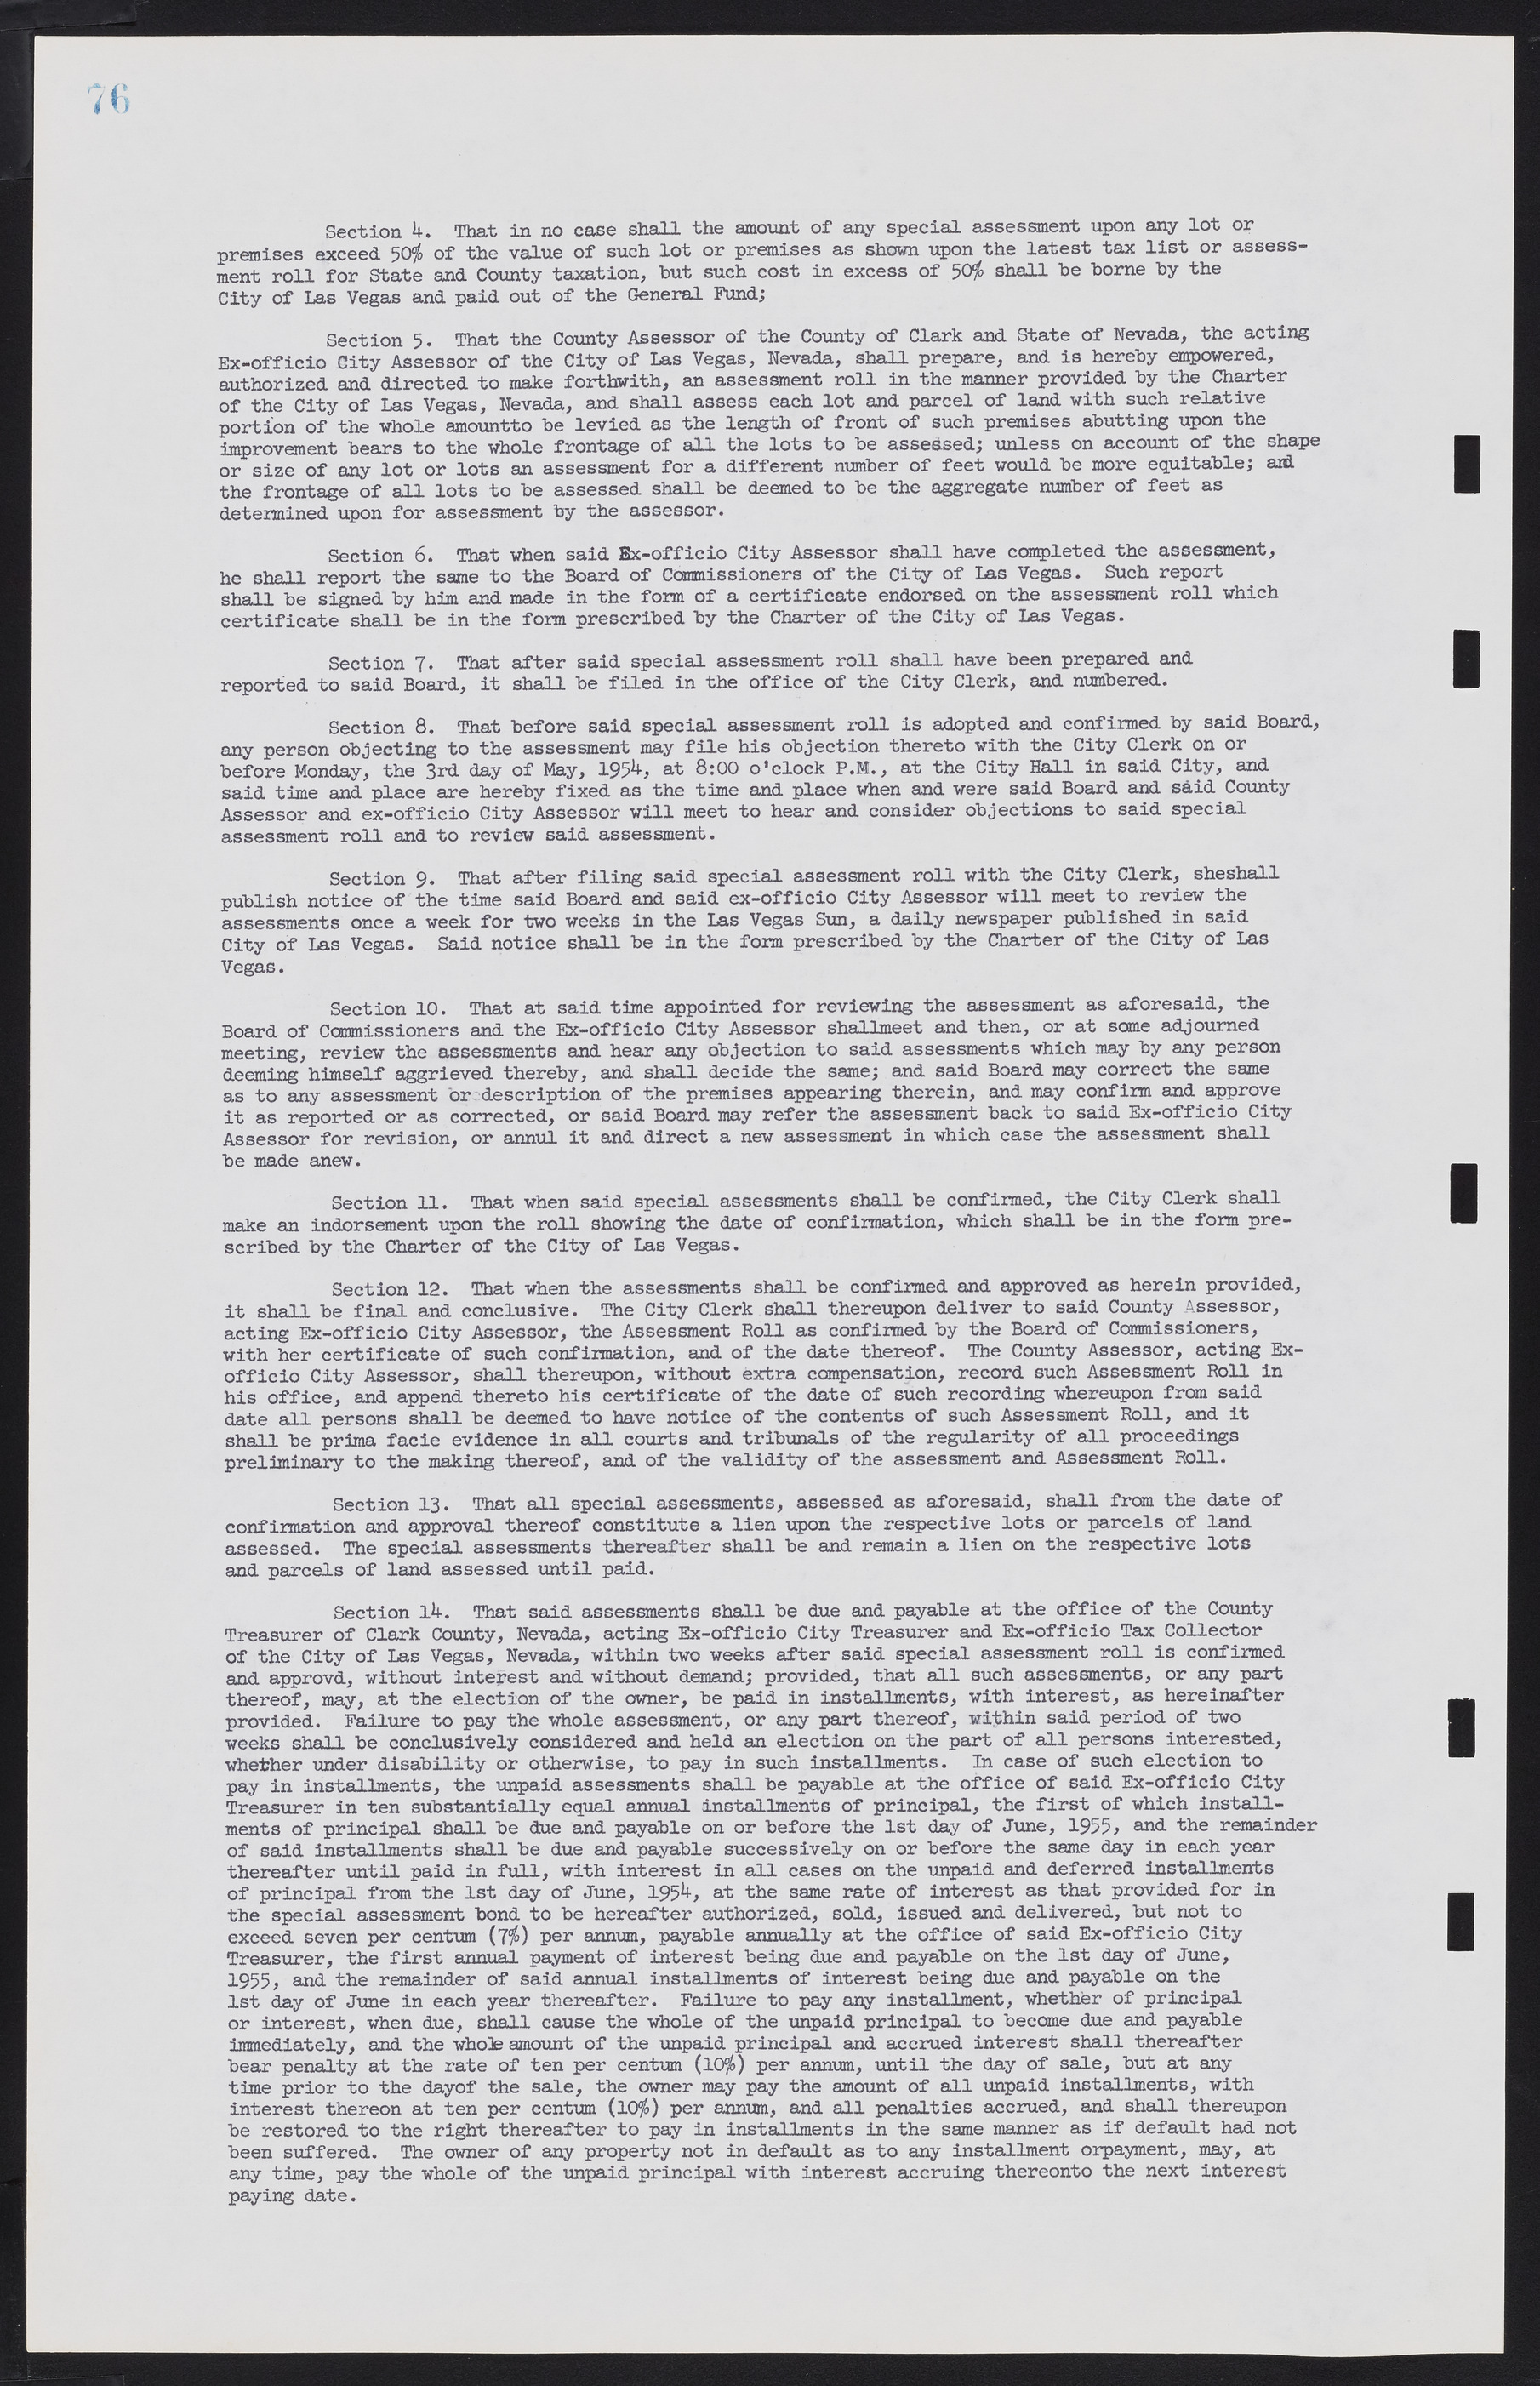 Las Vegas City Commission Minutes, February 17, 1954 to September 21, 1955, lvc000009-80